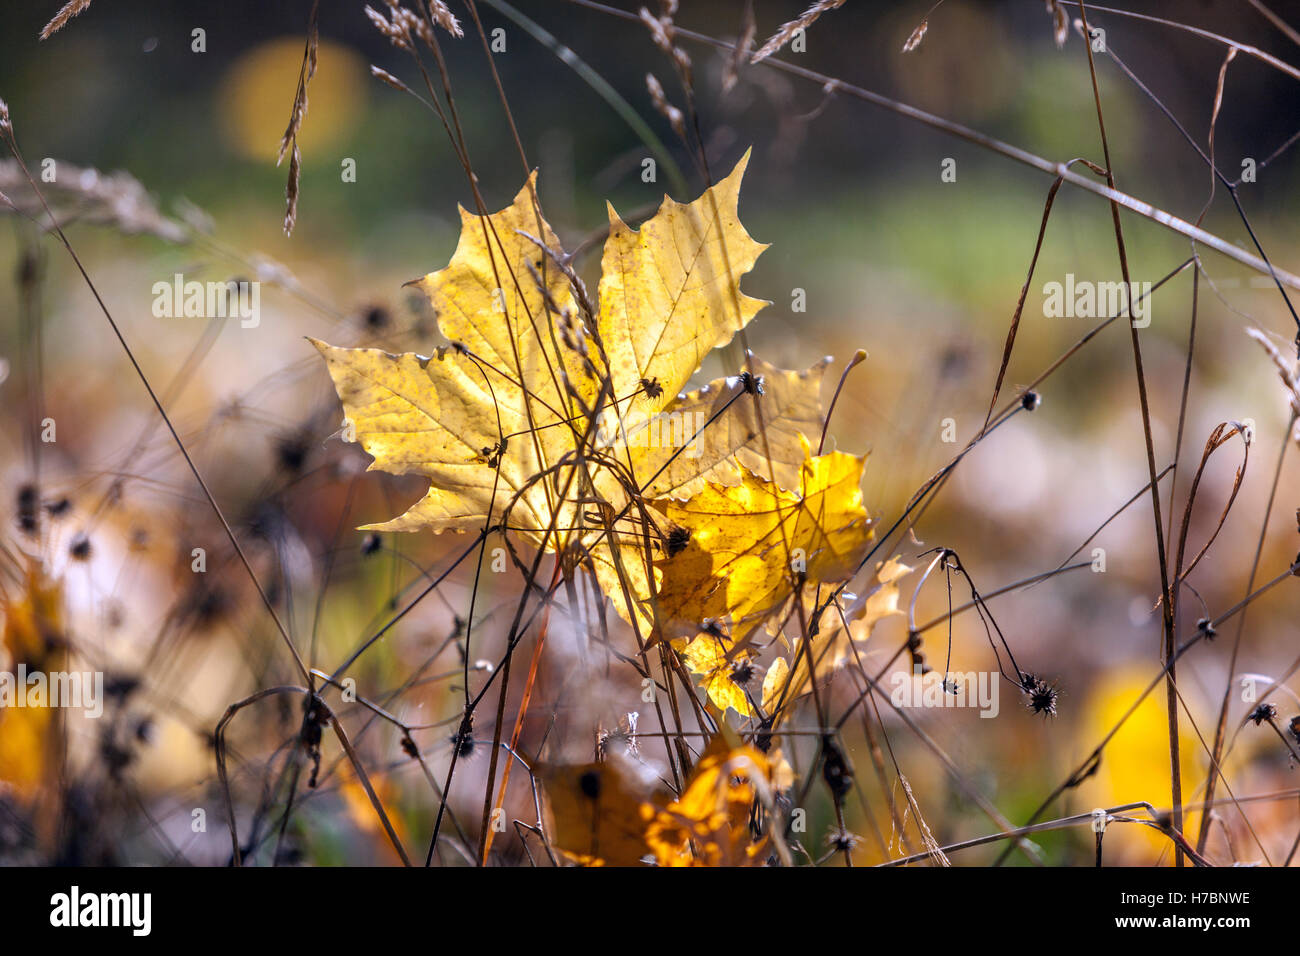 Acer platanoides, Noruega arce hoja en otoño caída otoño hoja viento, otoño Foto de stock